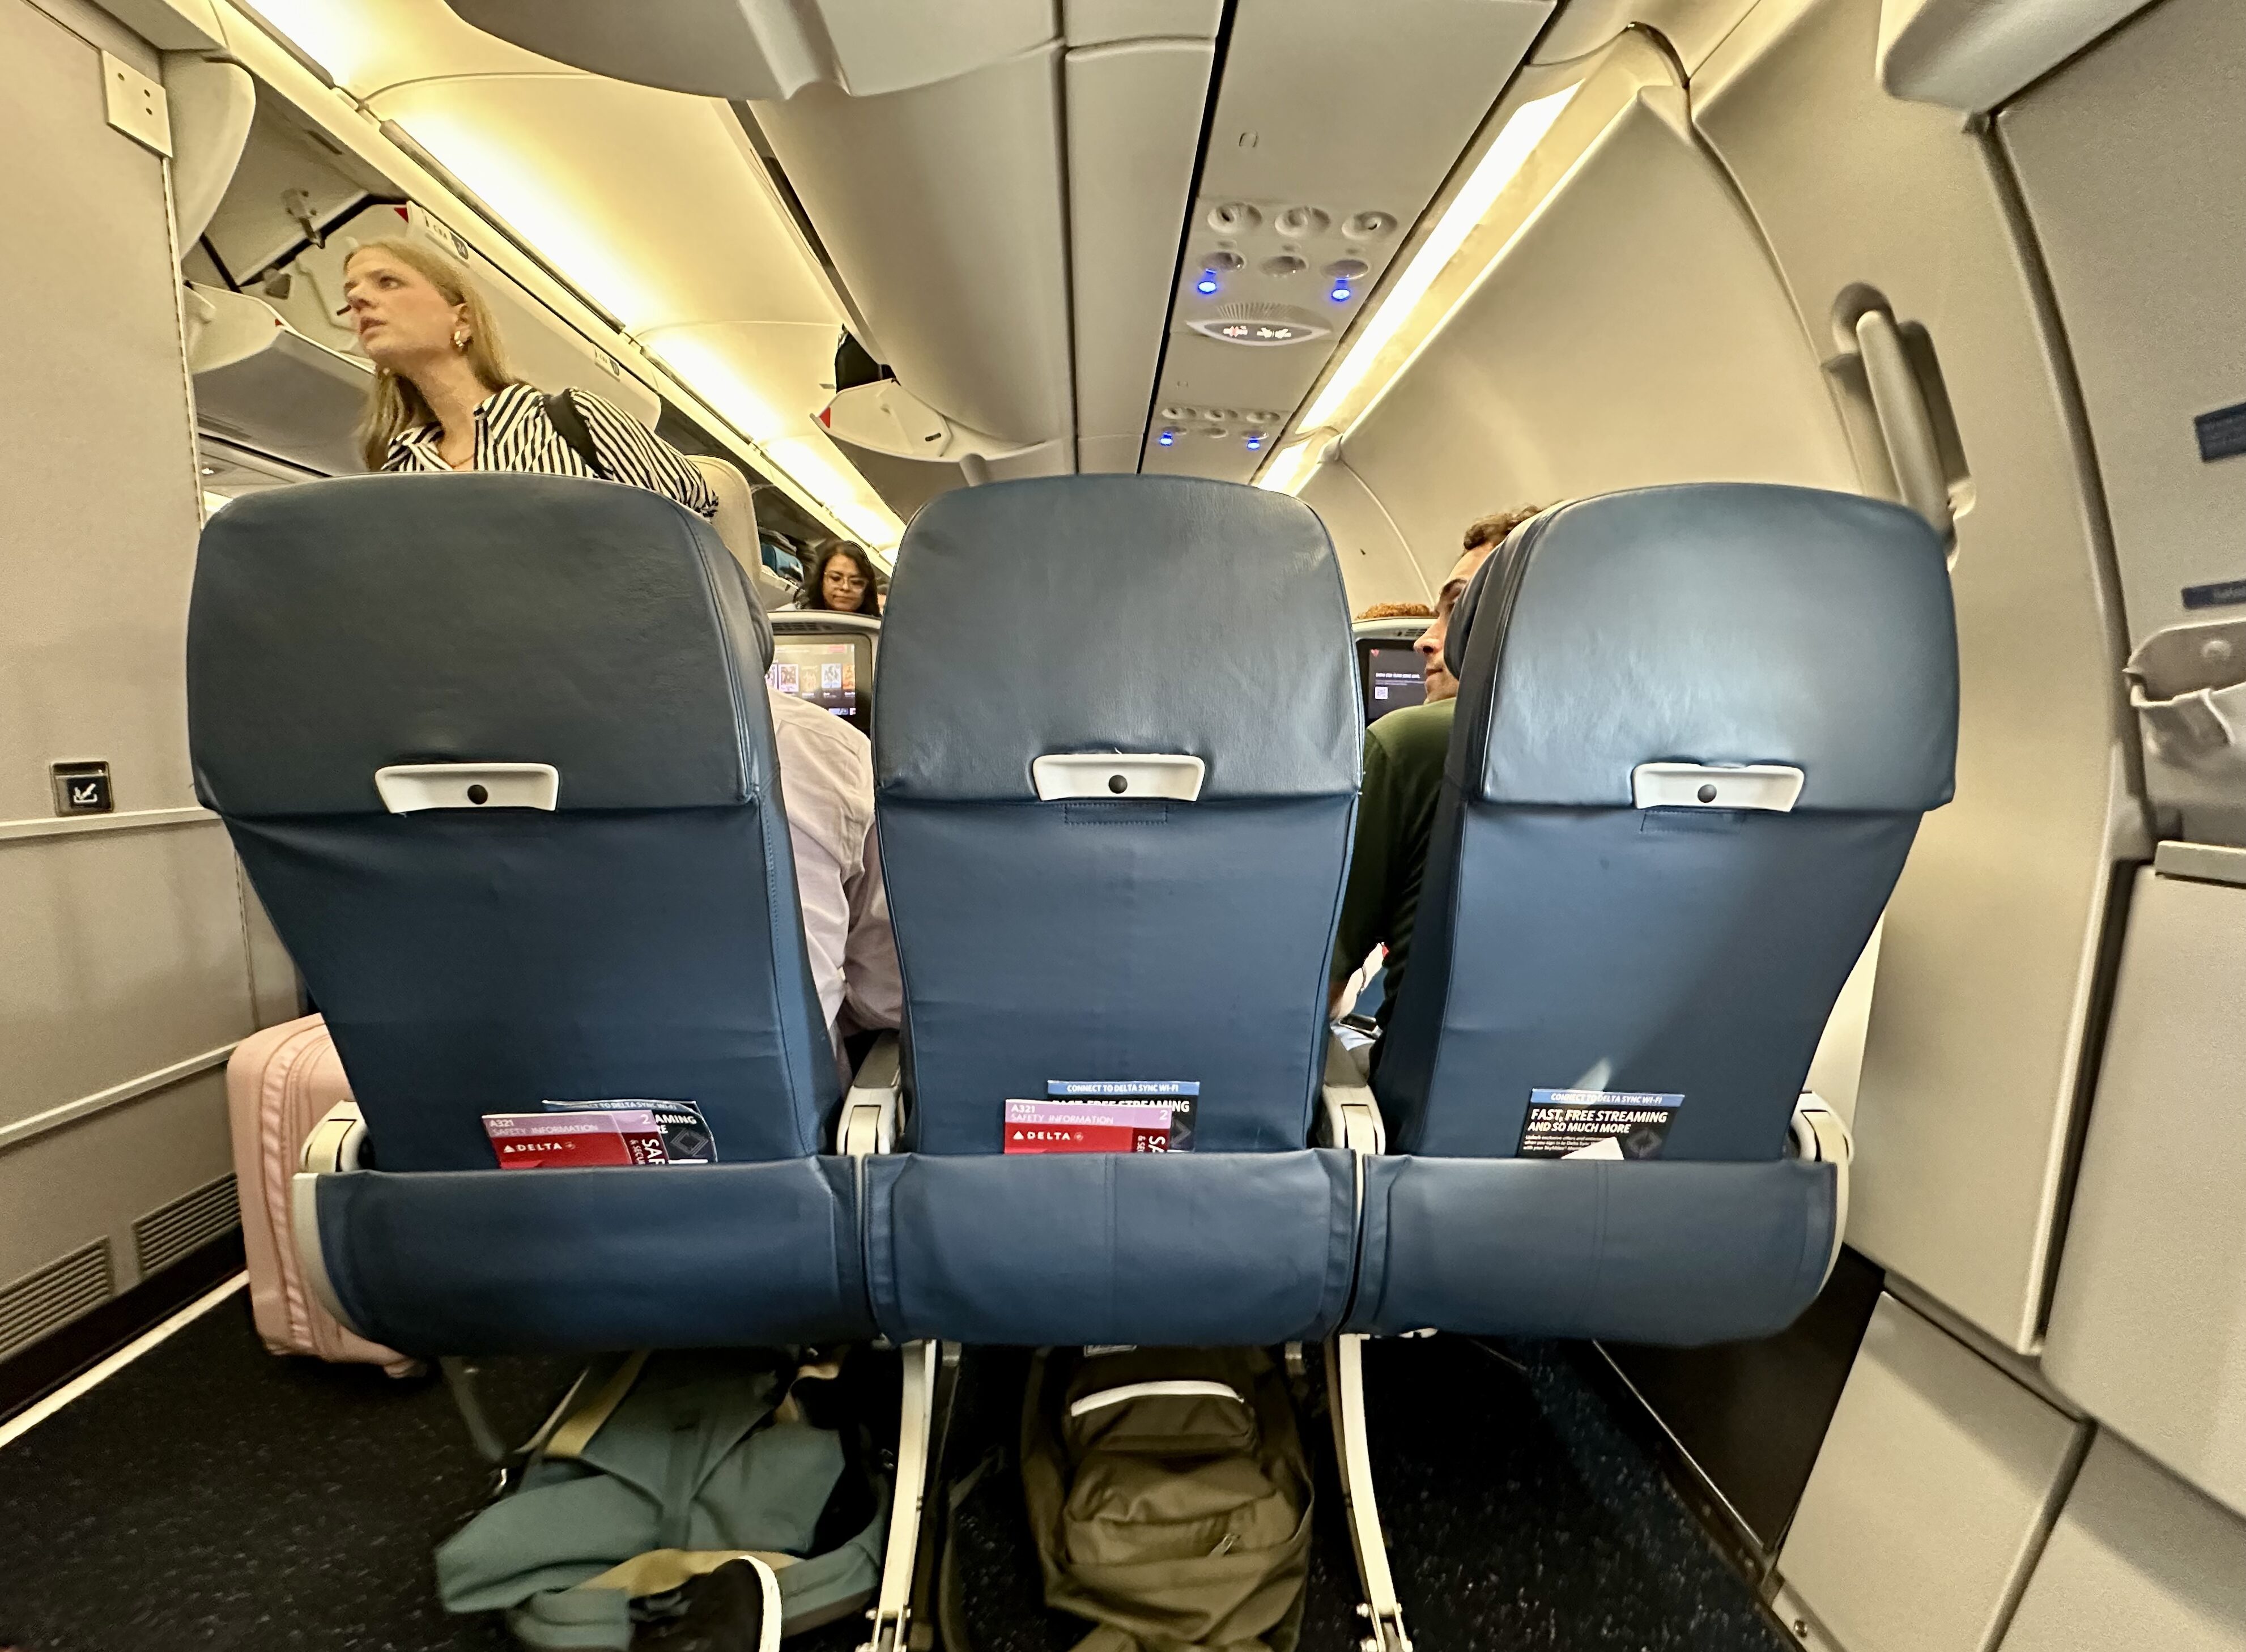 Delta A321 Main Cabin Seats in row 26.